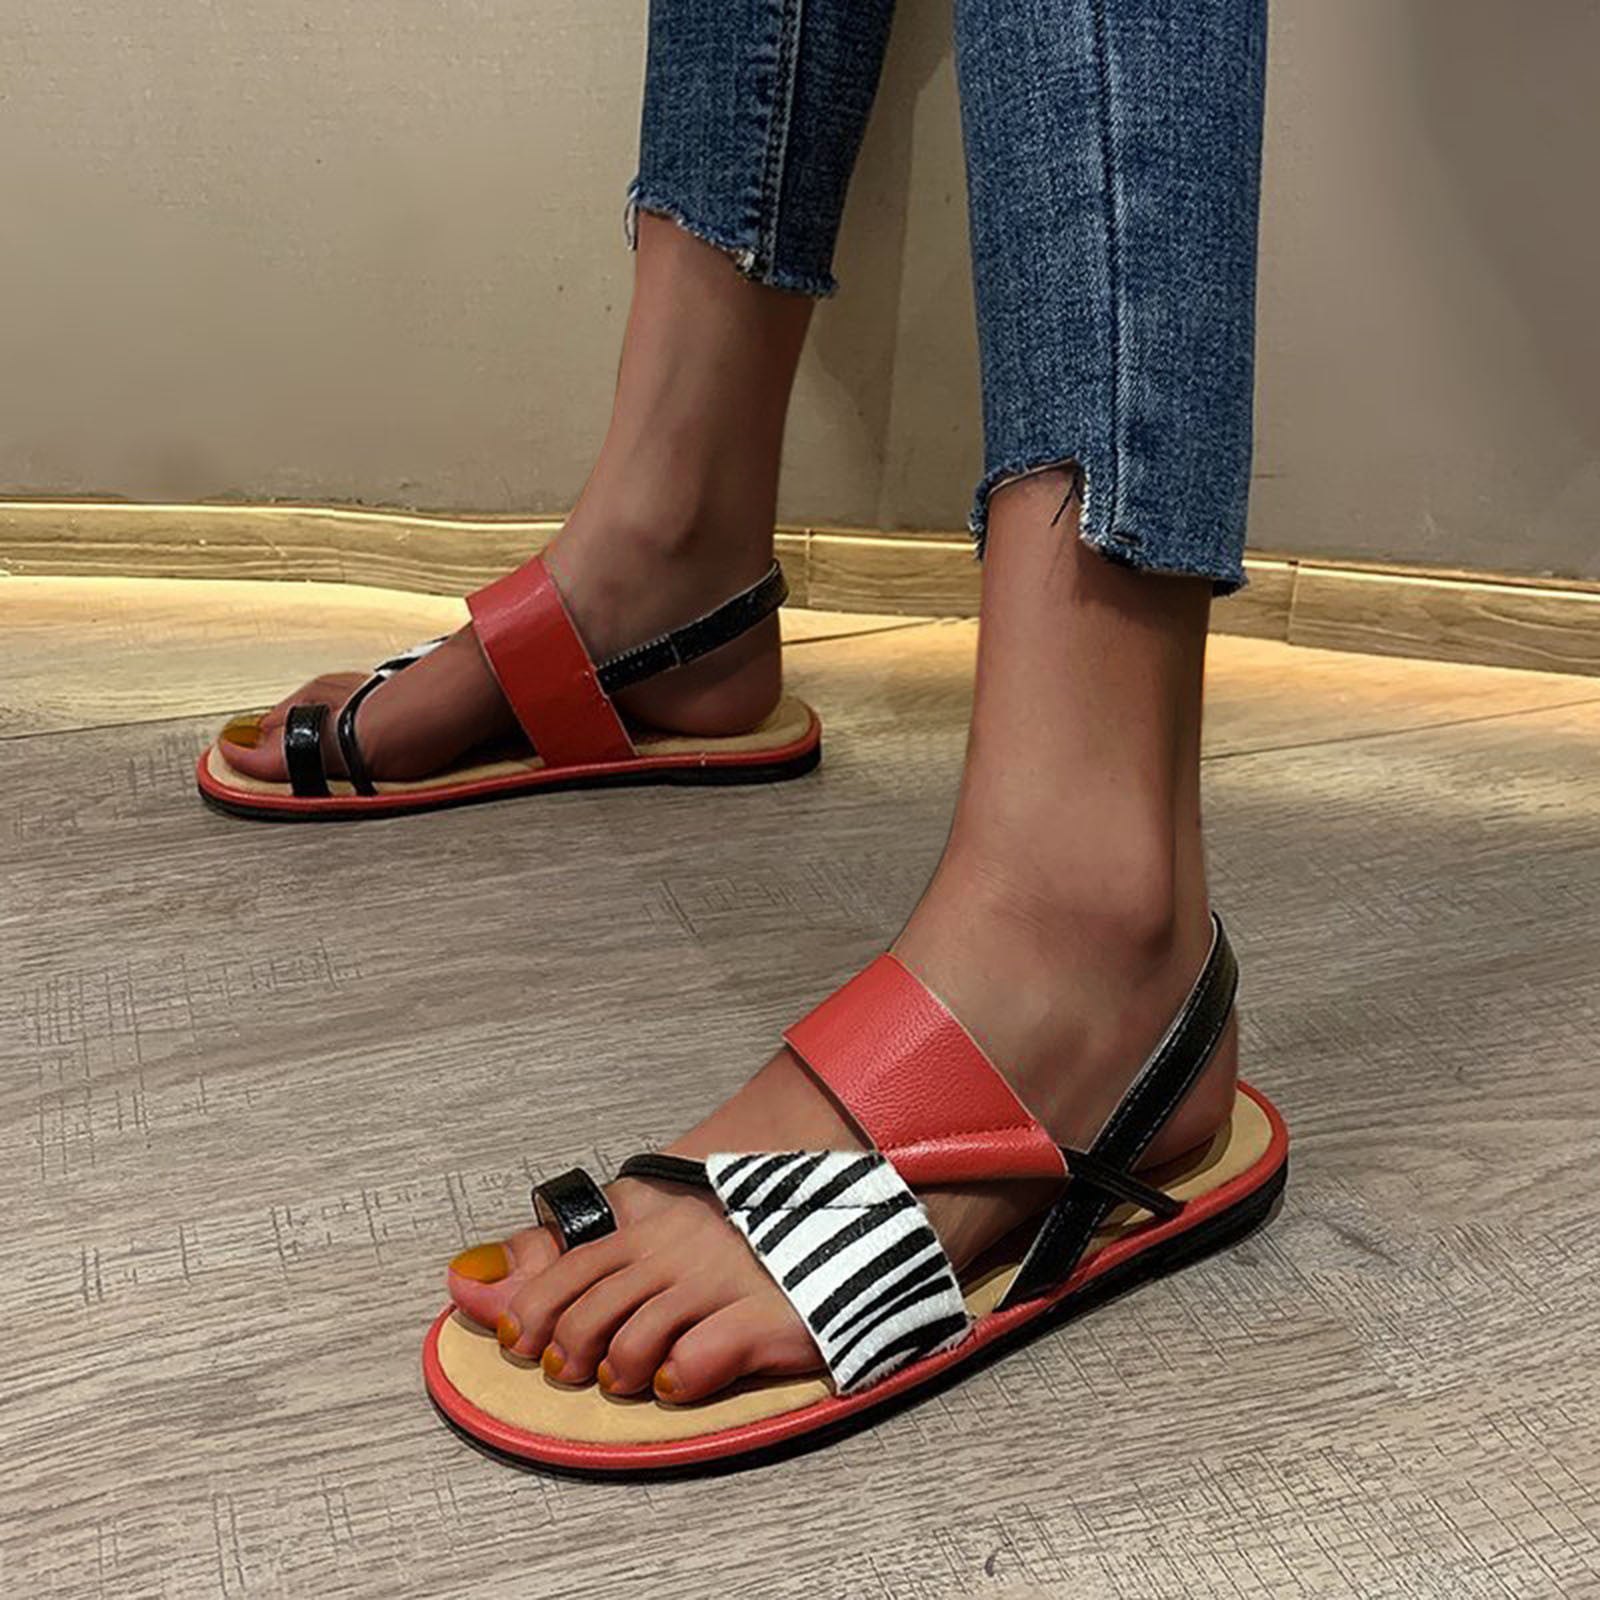 Shoes Sandals Flip-Flop Sandals Graceland Flip-Flop Sandals brown-red casual look 